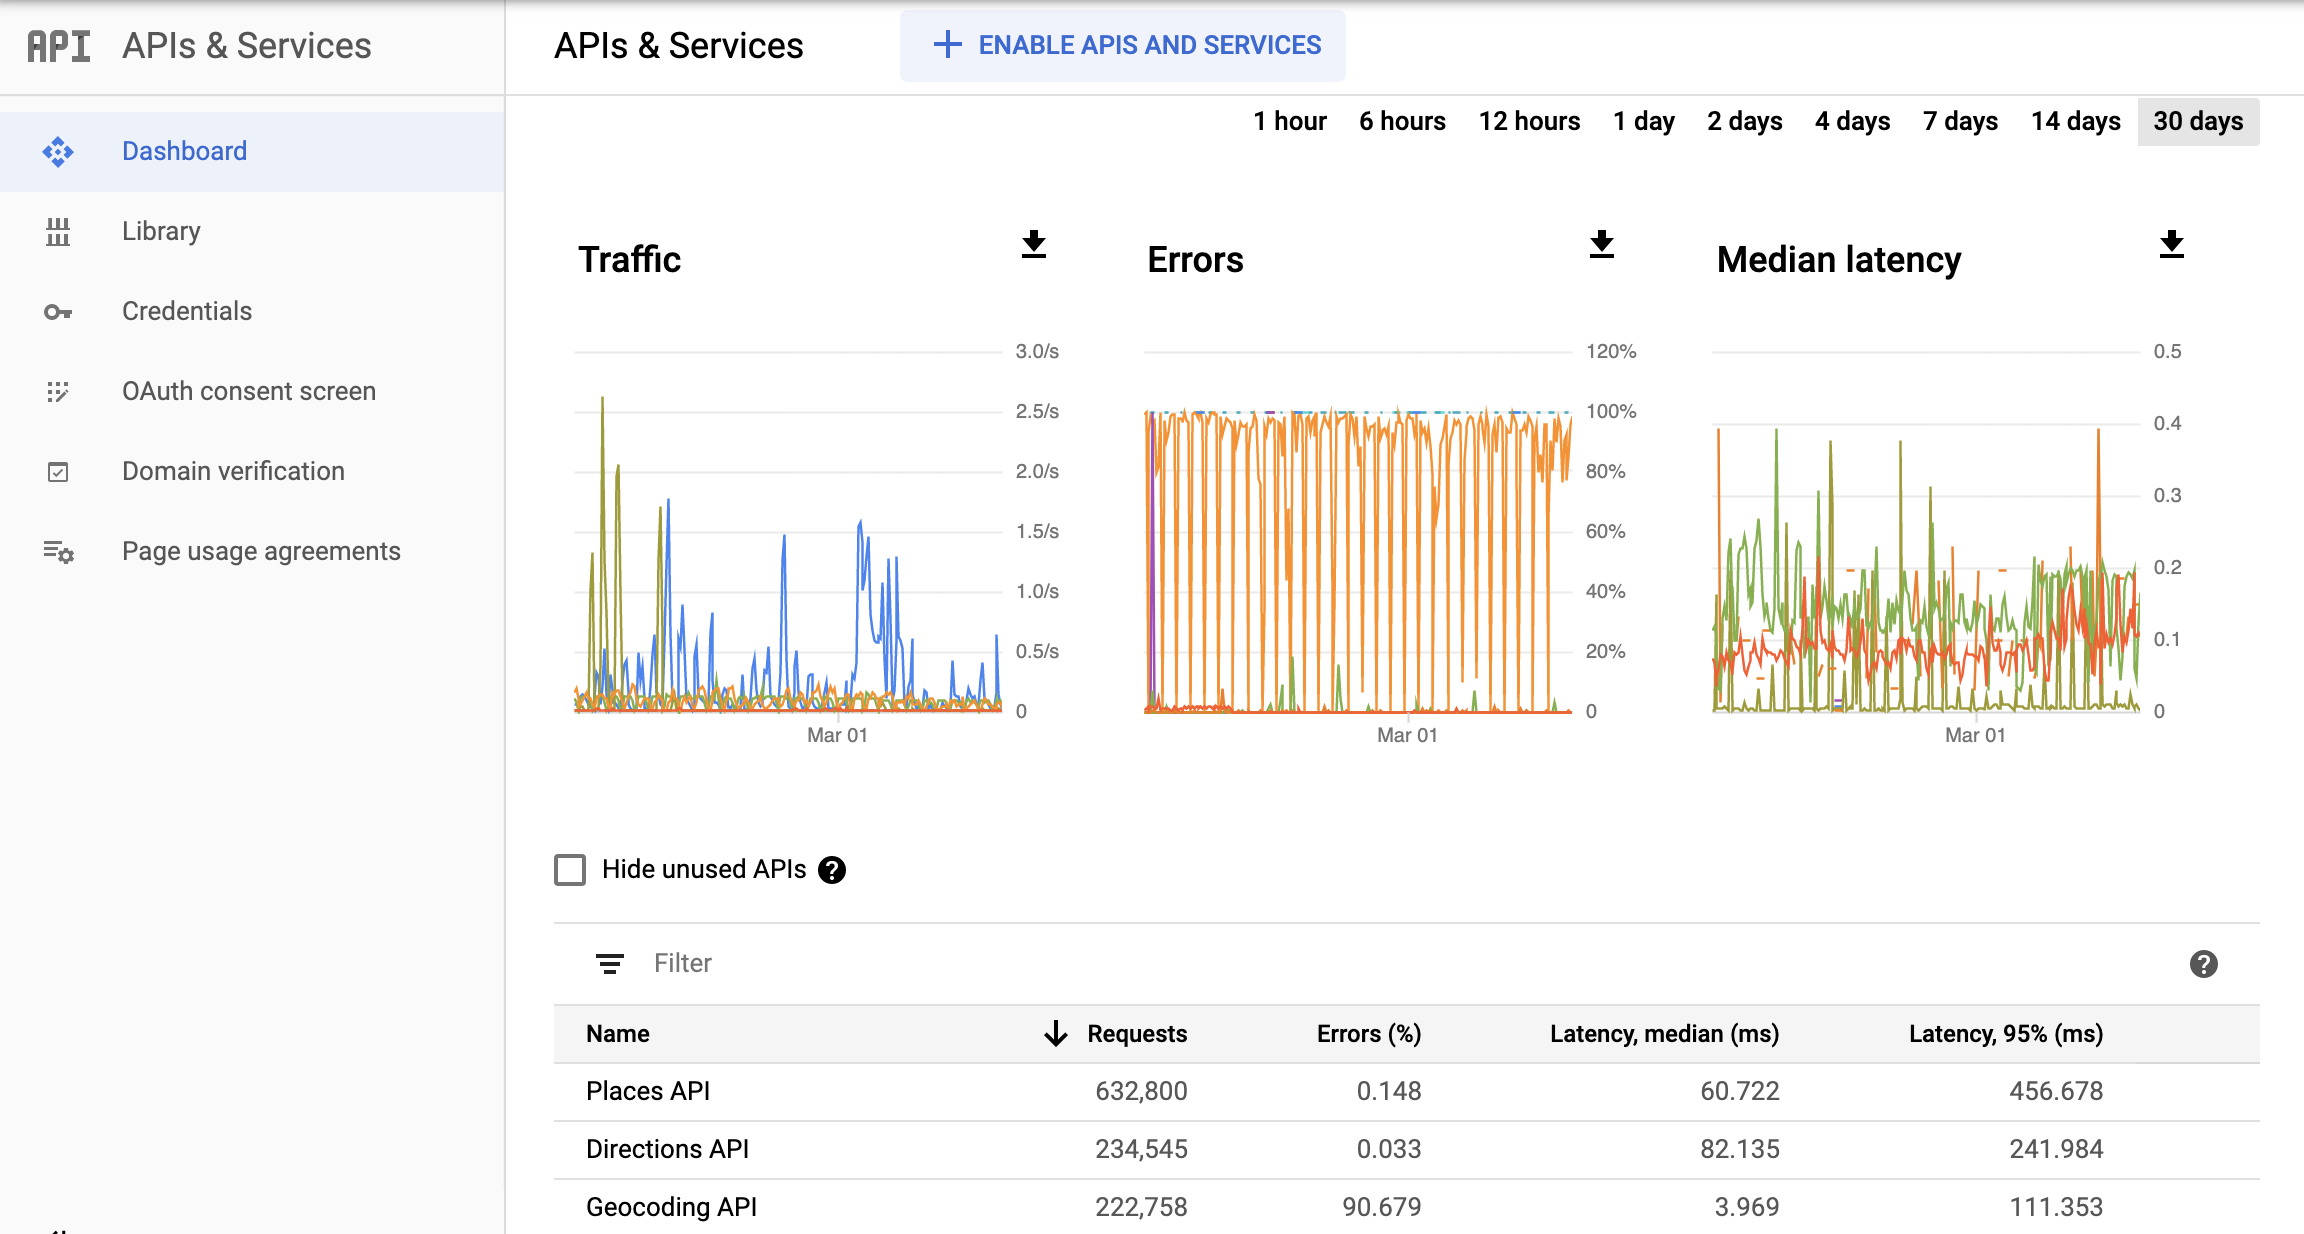 Google Cloud 控制台中 Monitoring API 頁面的螢幕截圖，顯示「APIs & Services」(API 和服務) 報表資訊主頁，以及「Traffic」(流量)、「Errors」(錯誤) 和「Median Latency」(延遲時間中位數) 三種圖表。這些圖表可顯示 1 小時至 30 天的資料。